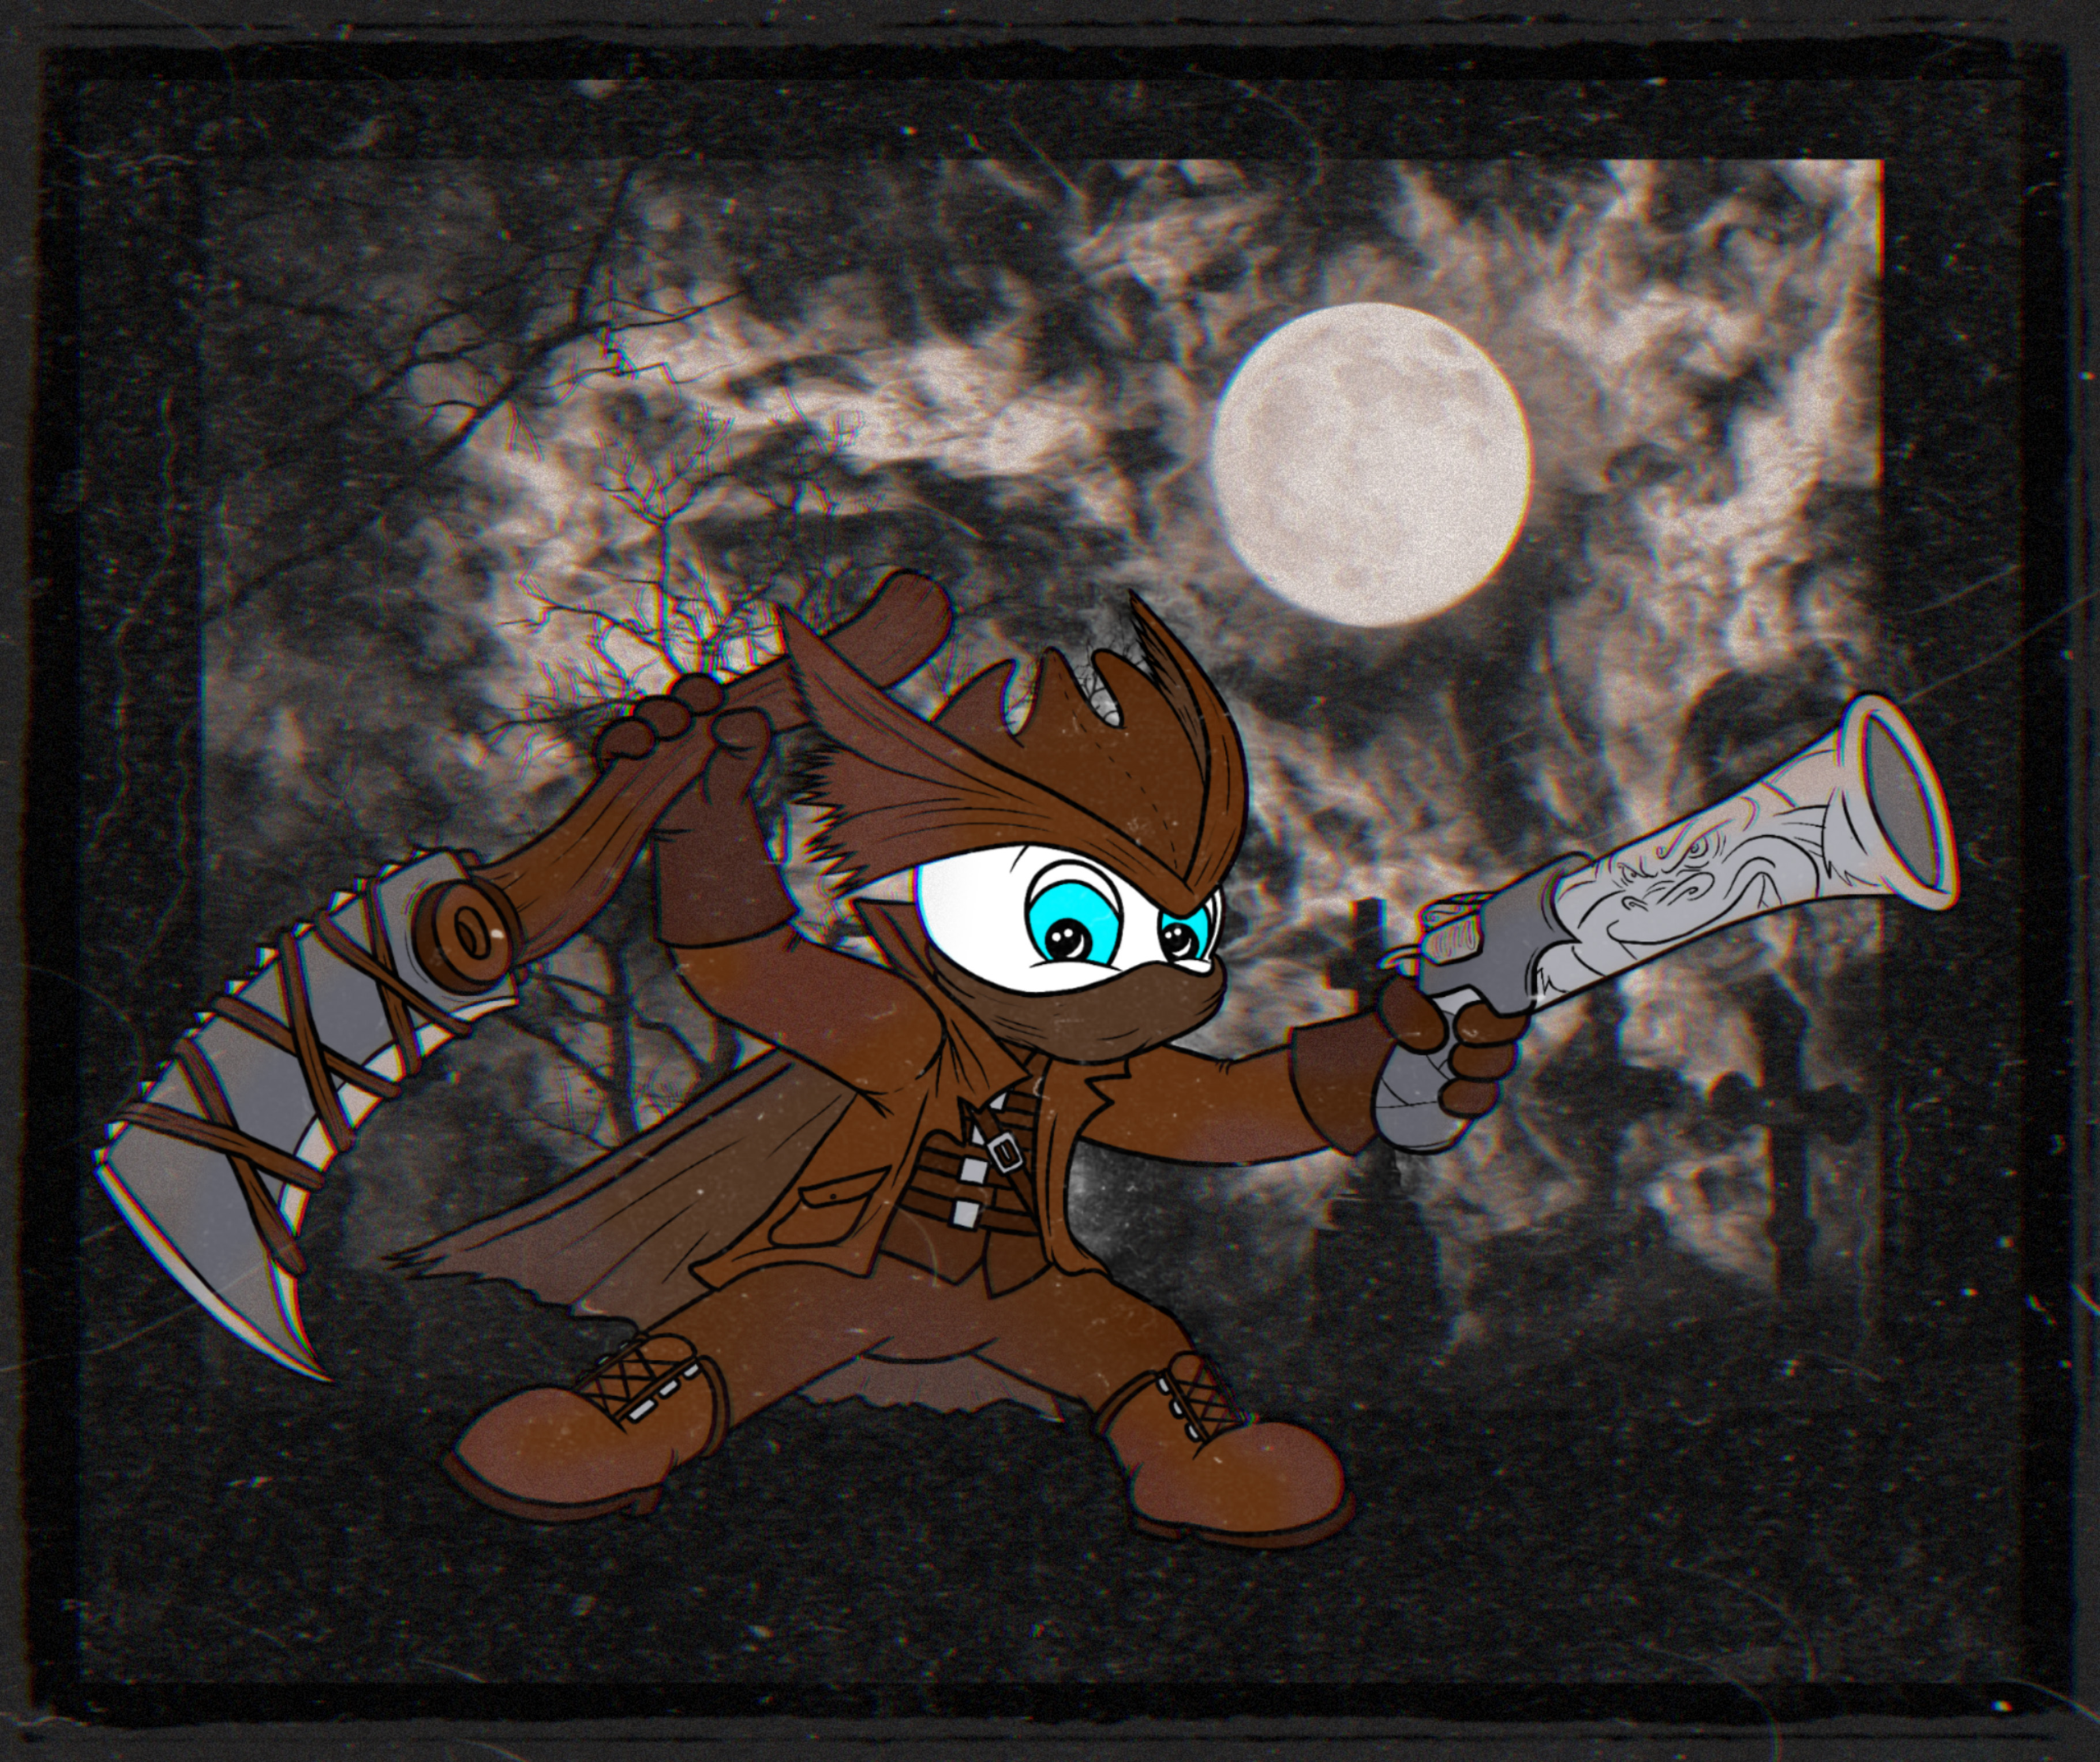 Sporky as the Bloodborne Hunter